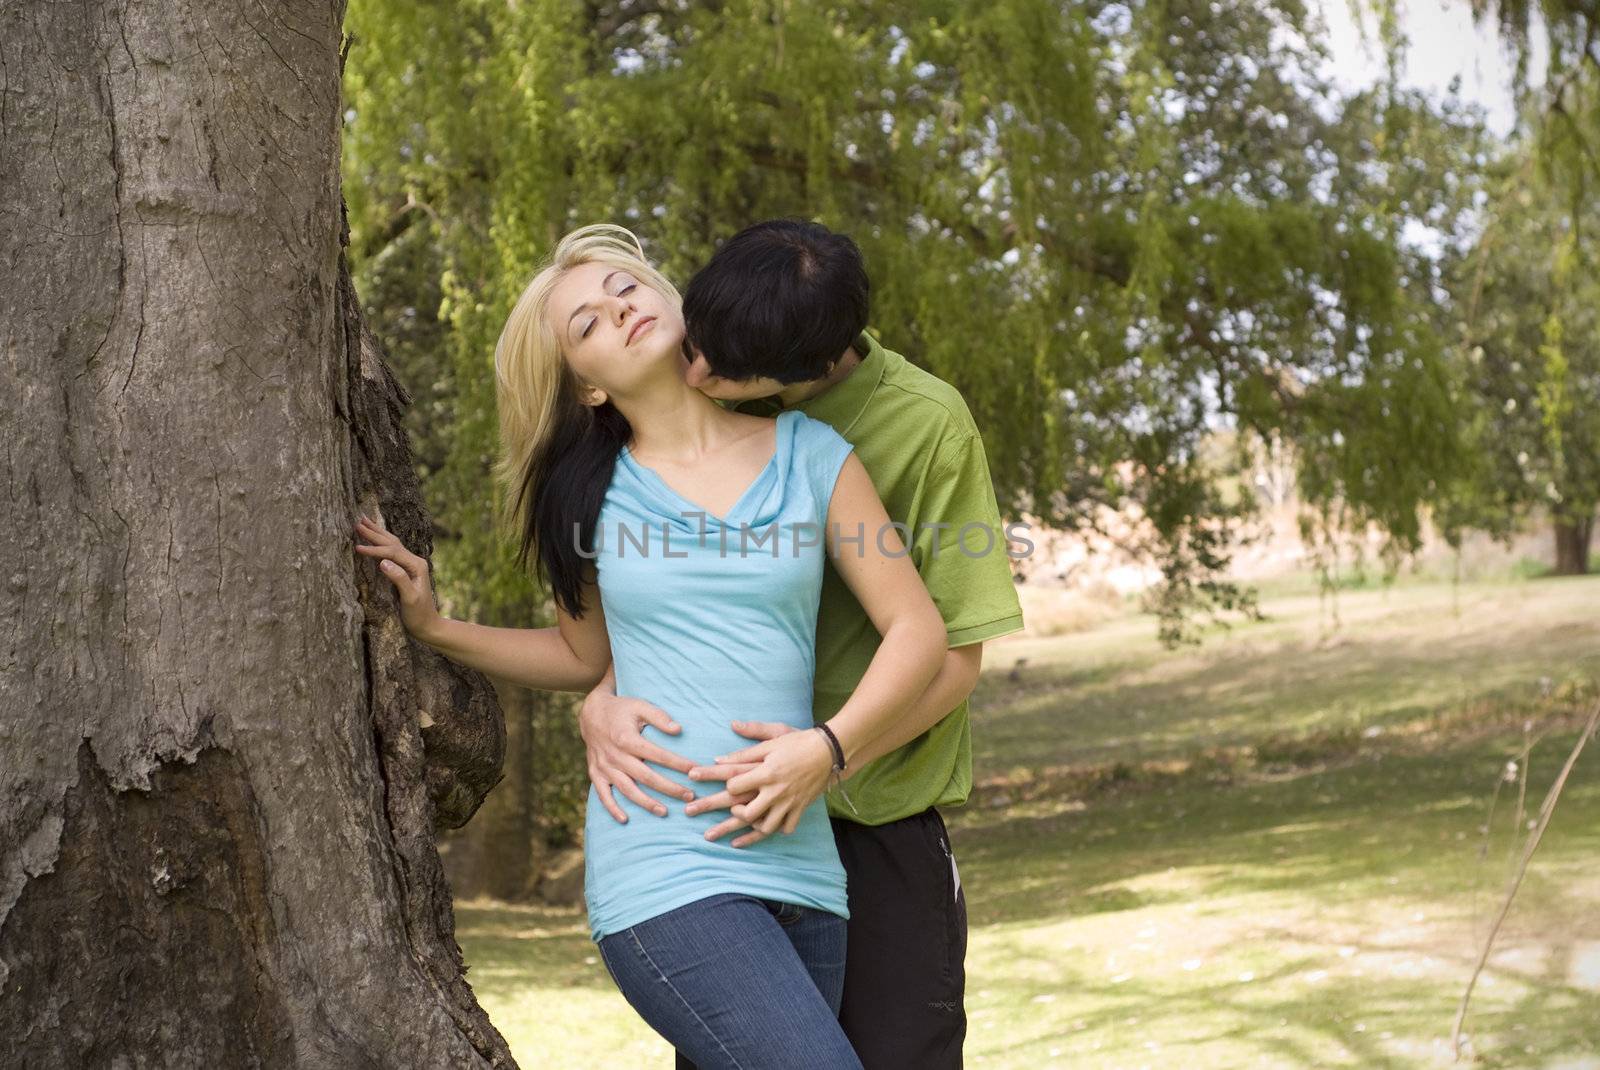 Boyfriend kissing girlfriend on neck in garden with tree